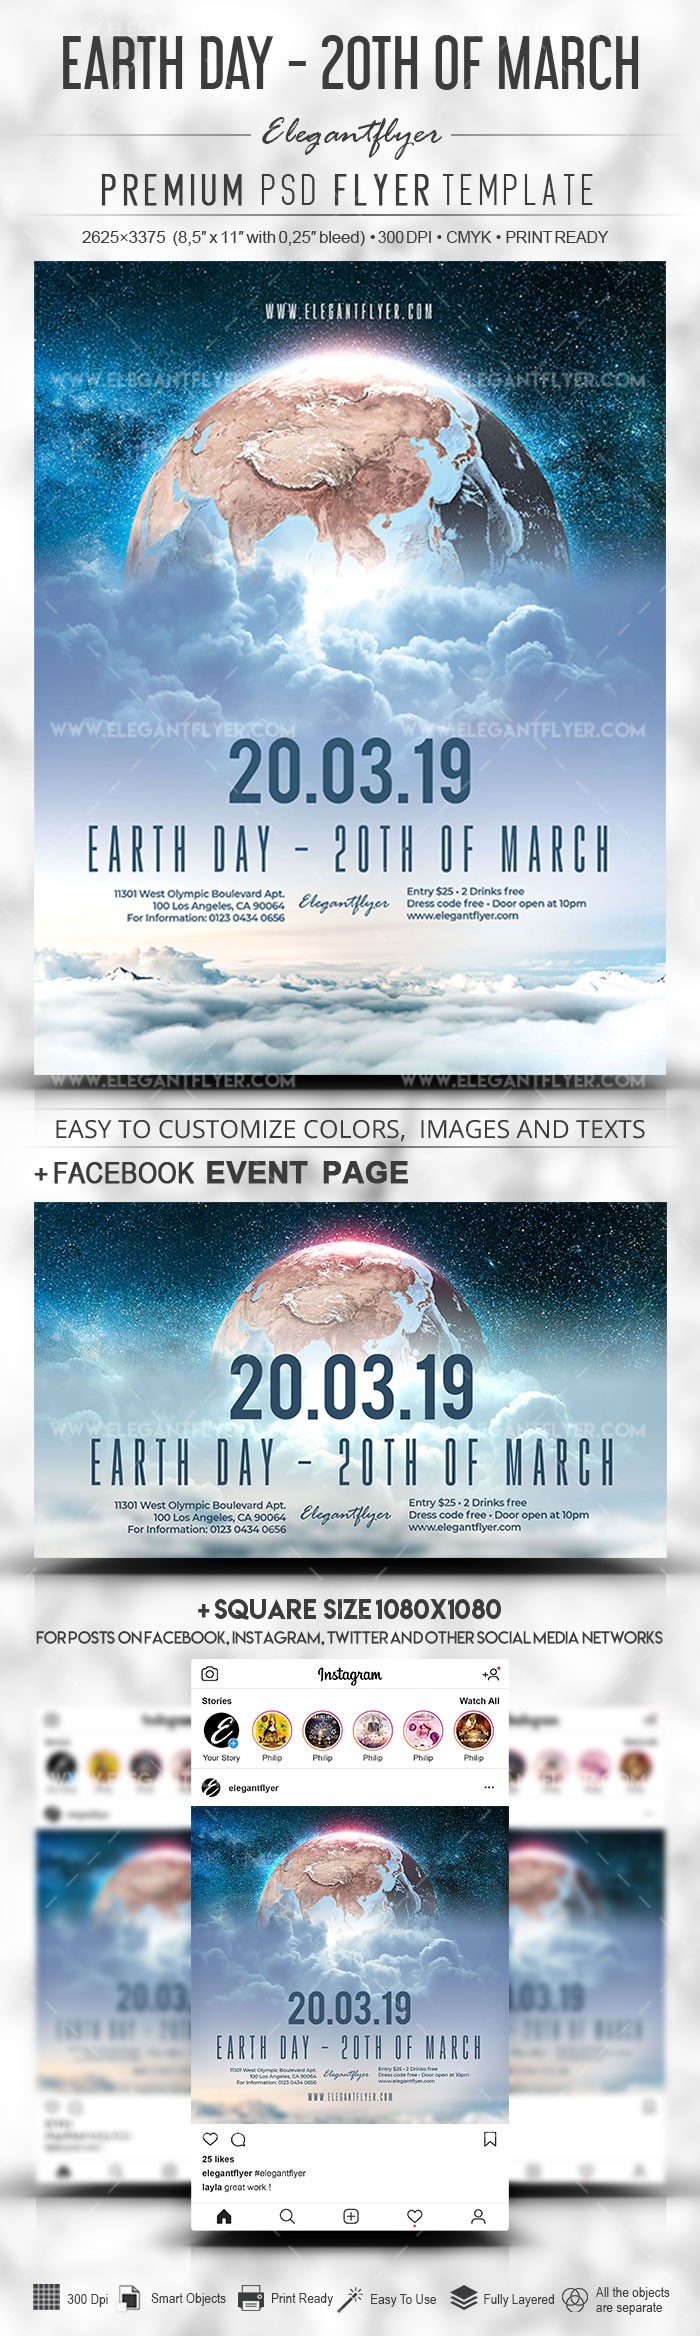 Earth Day - 20th of March by ElegantFlyer